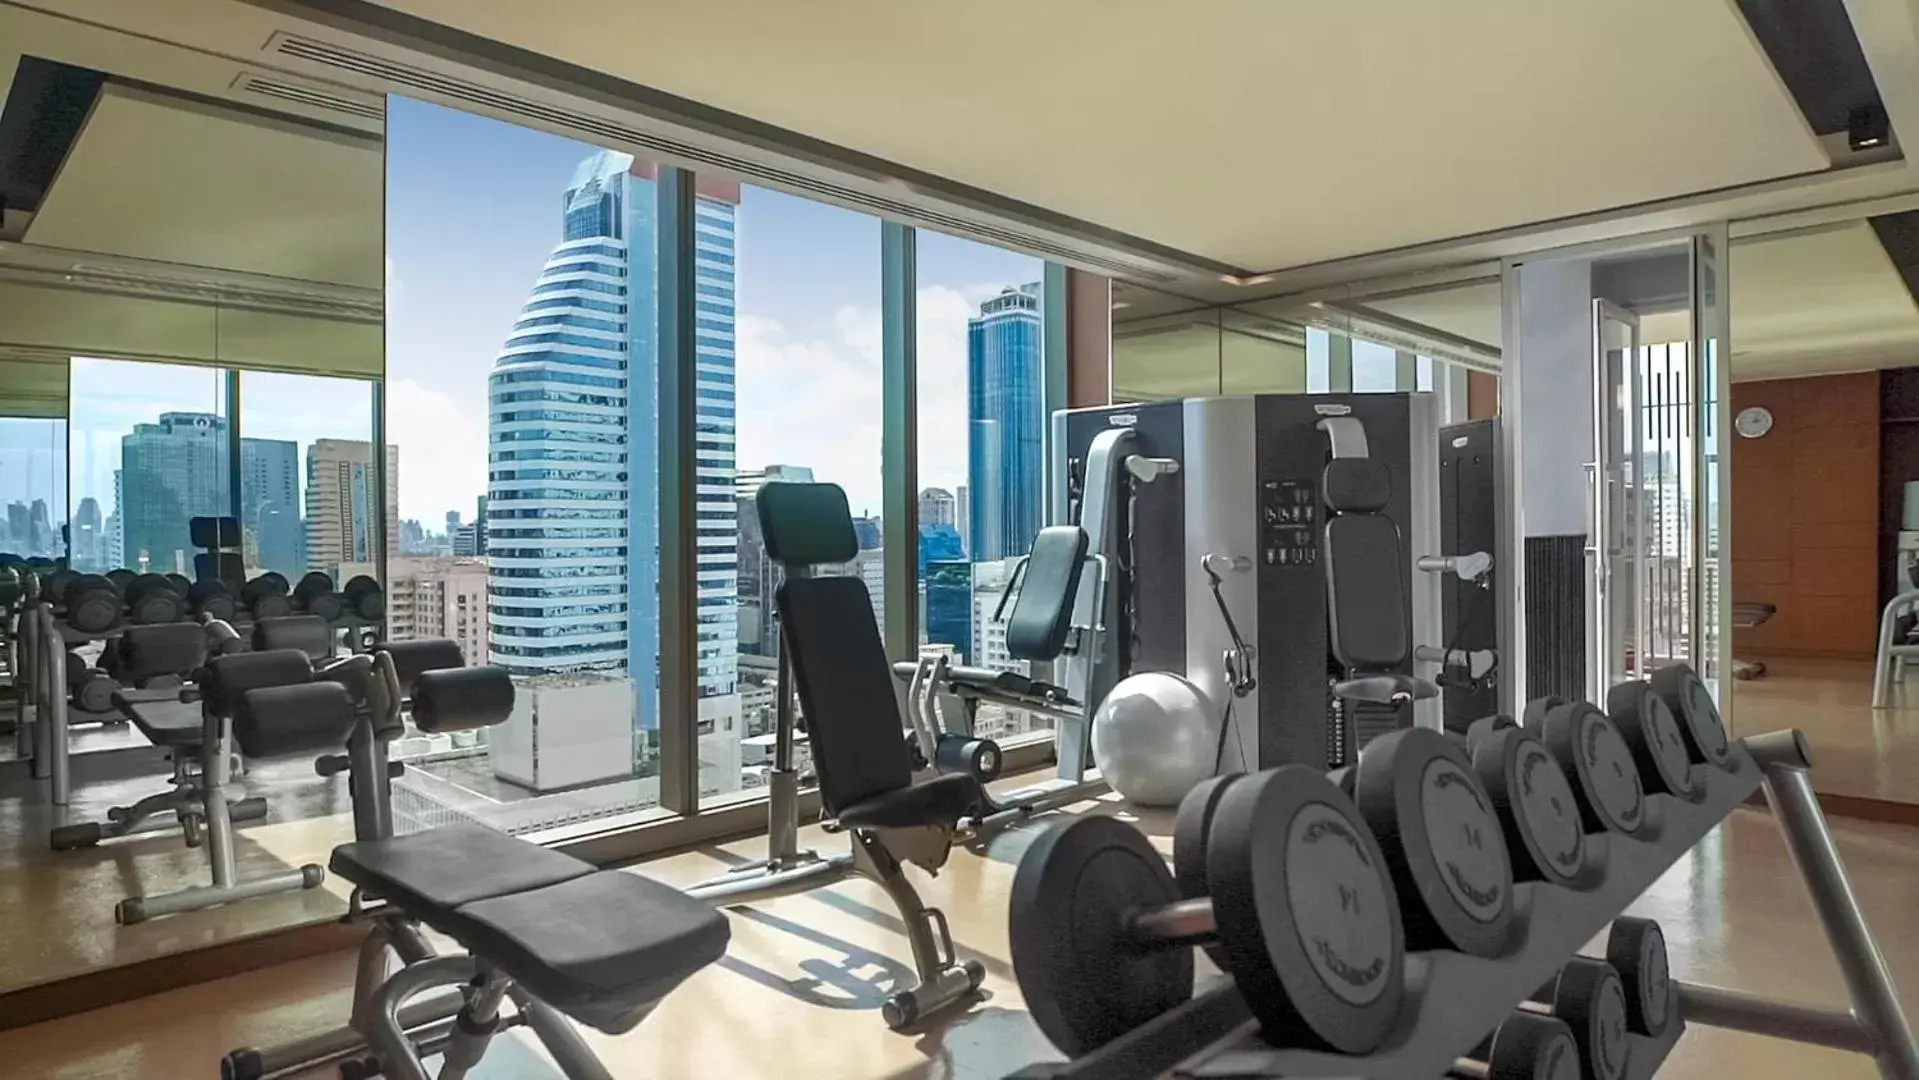 Fitness centre/facilities, Fitness Center/Facilities in Amara Bangkok Hotel